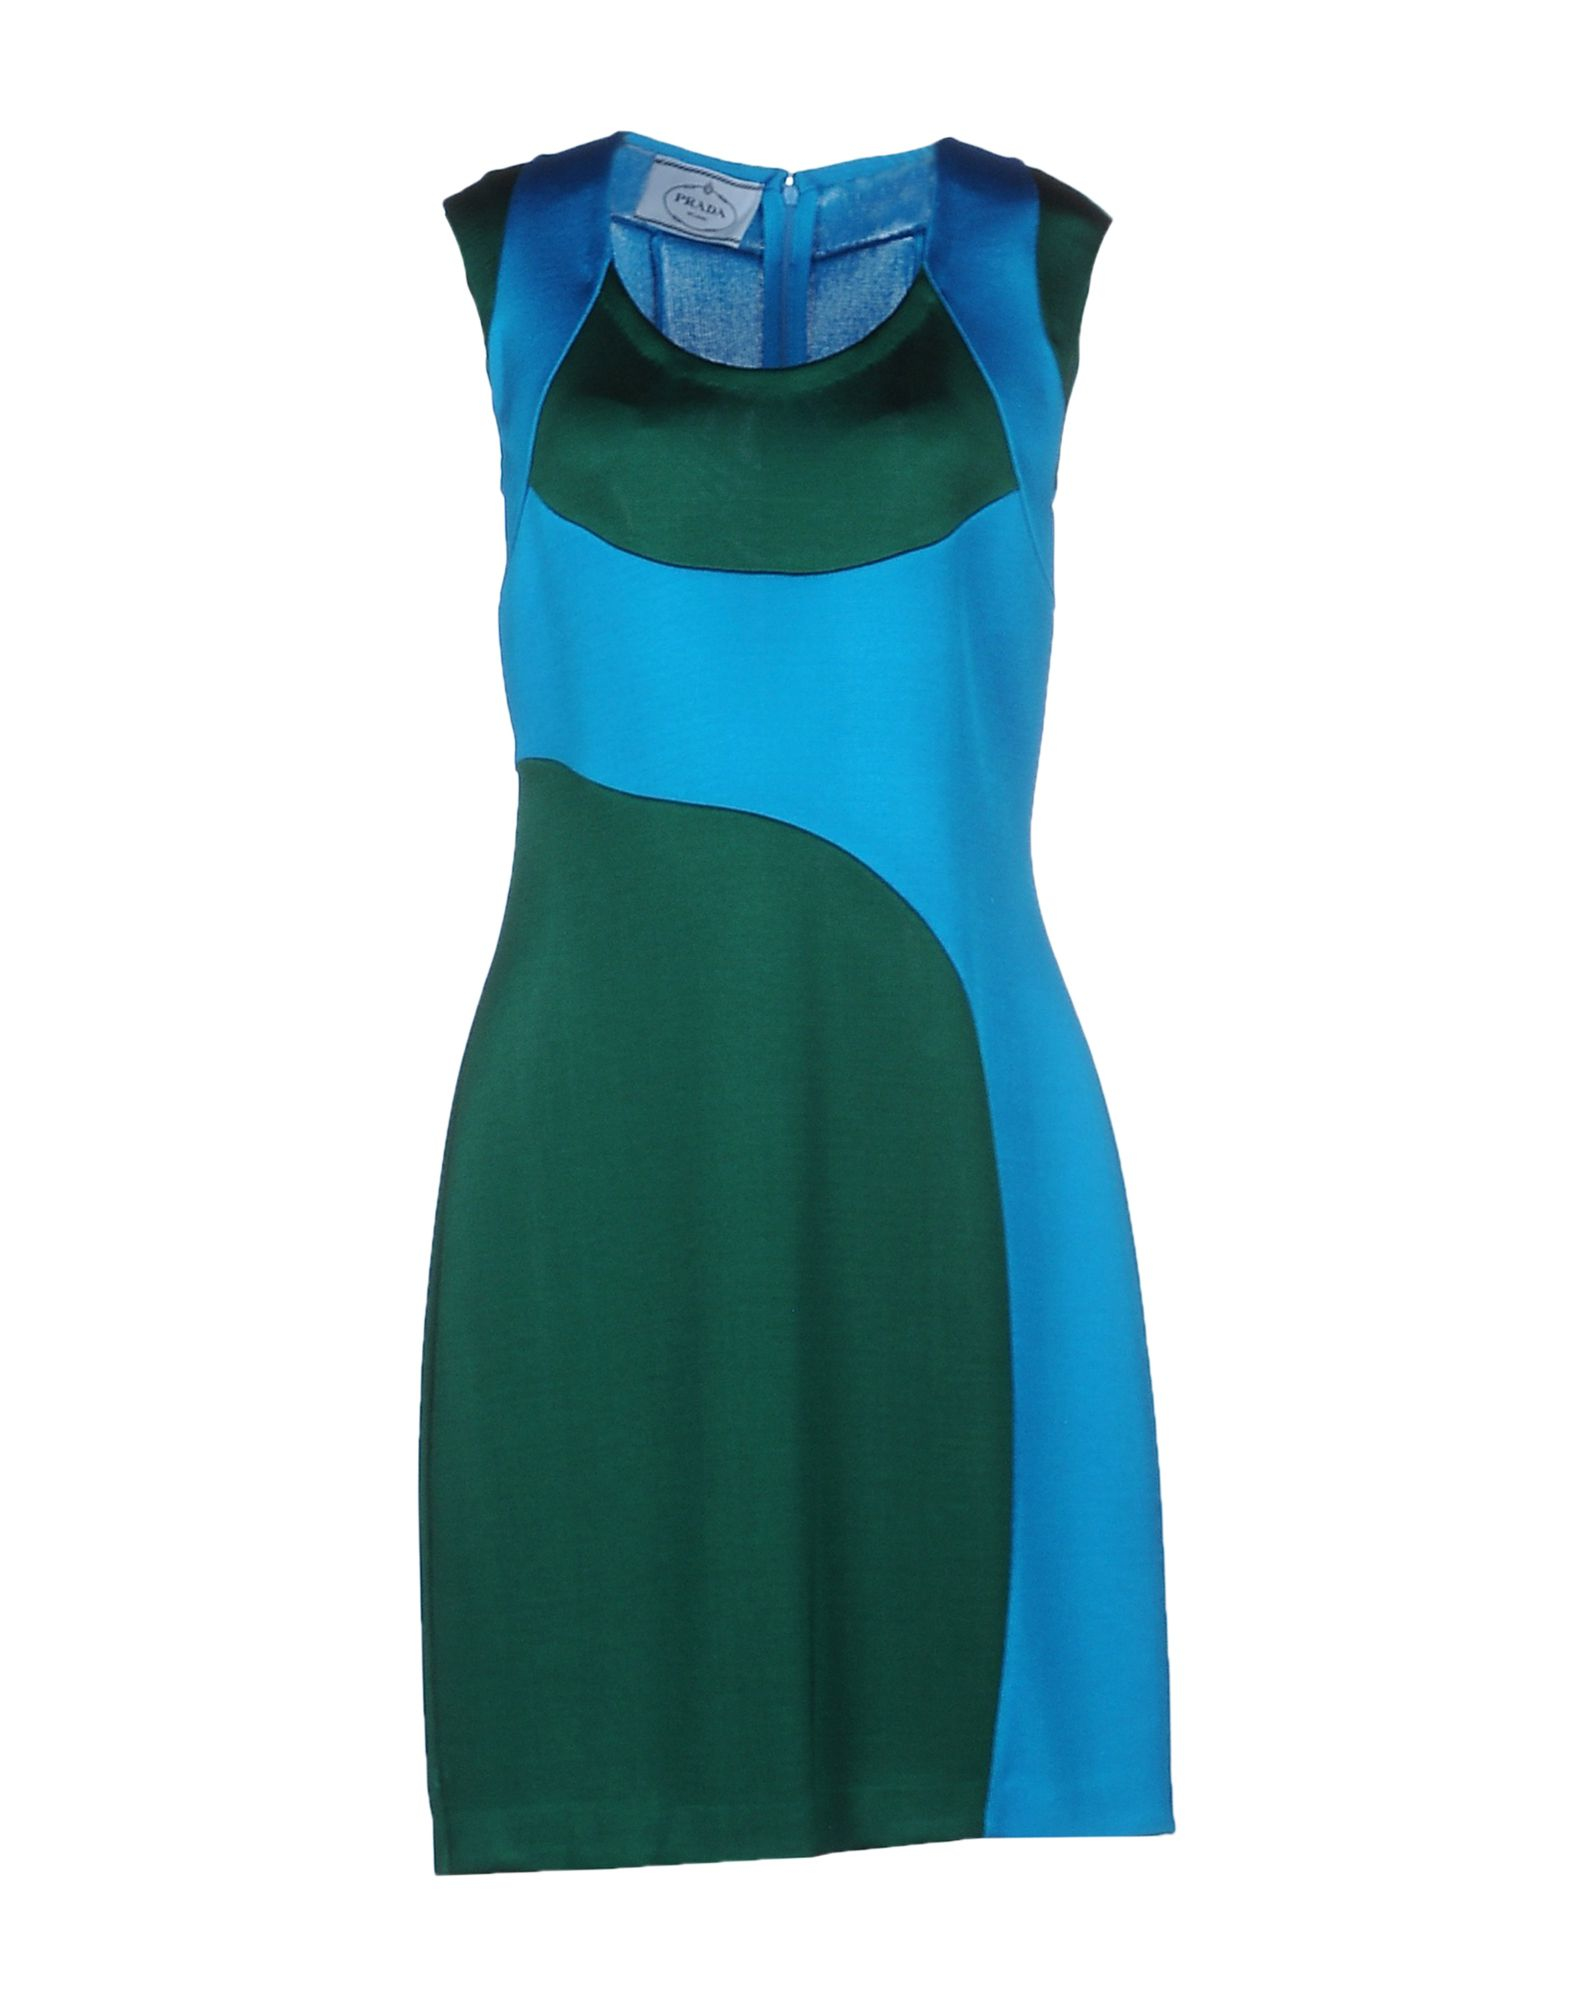 Prada Short Dress in Multicolor (Green) - Save 73% | Lyst